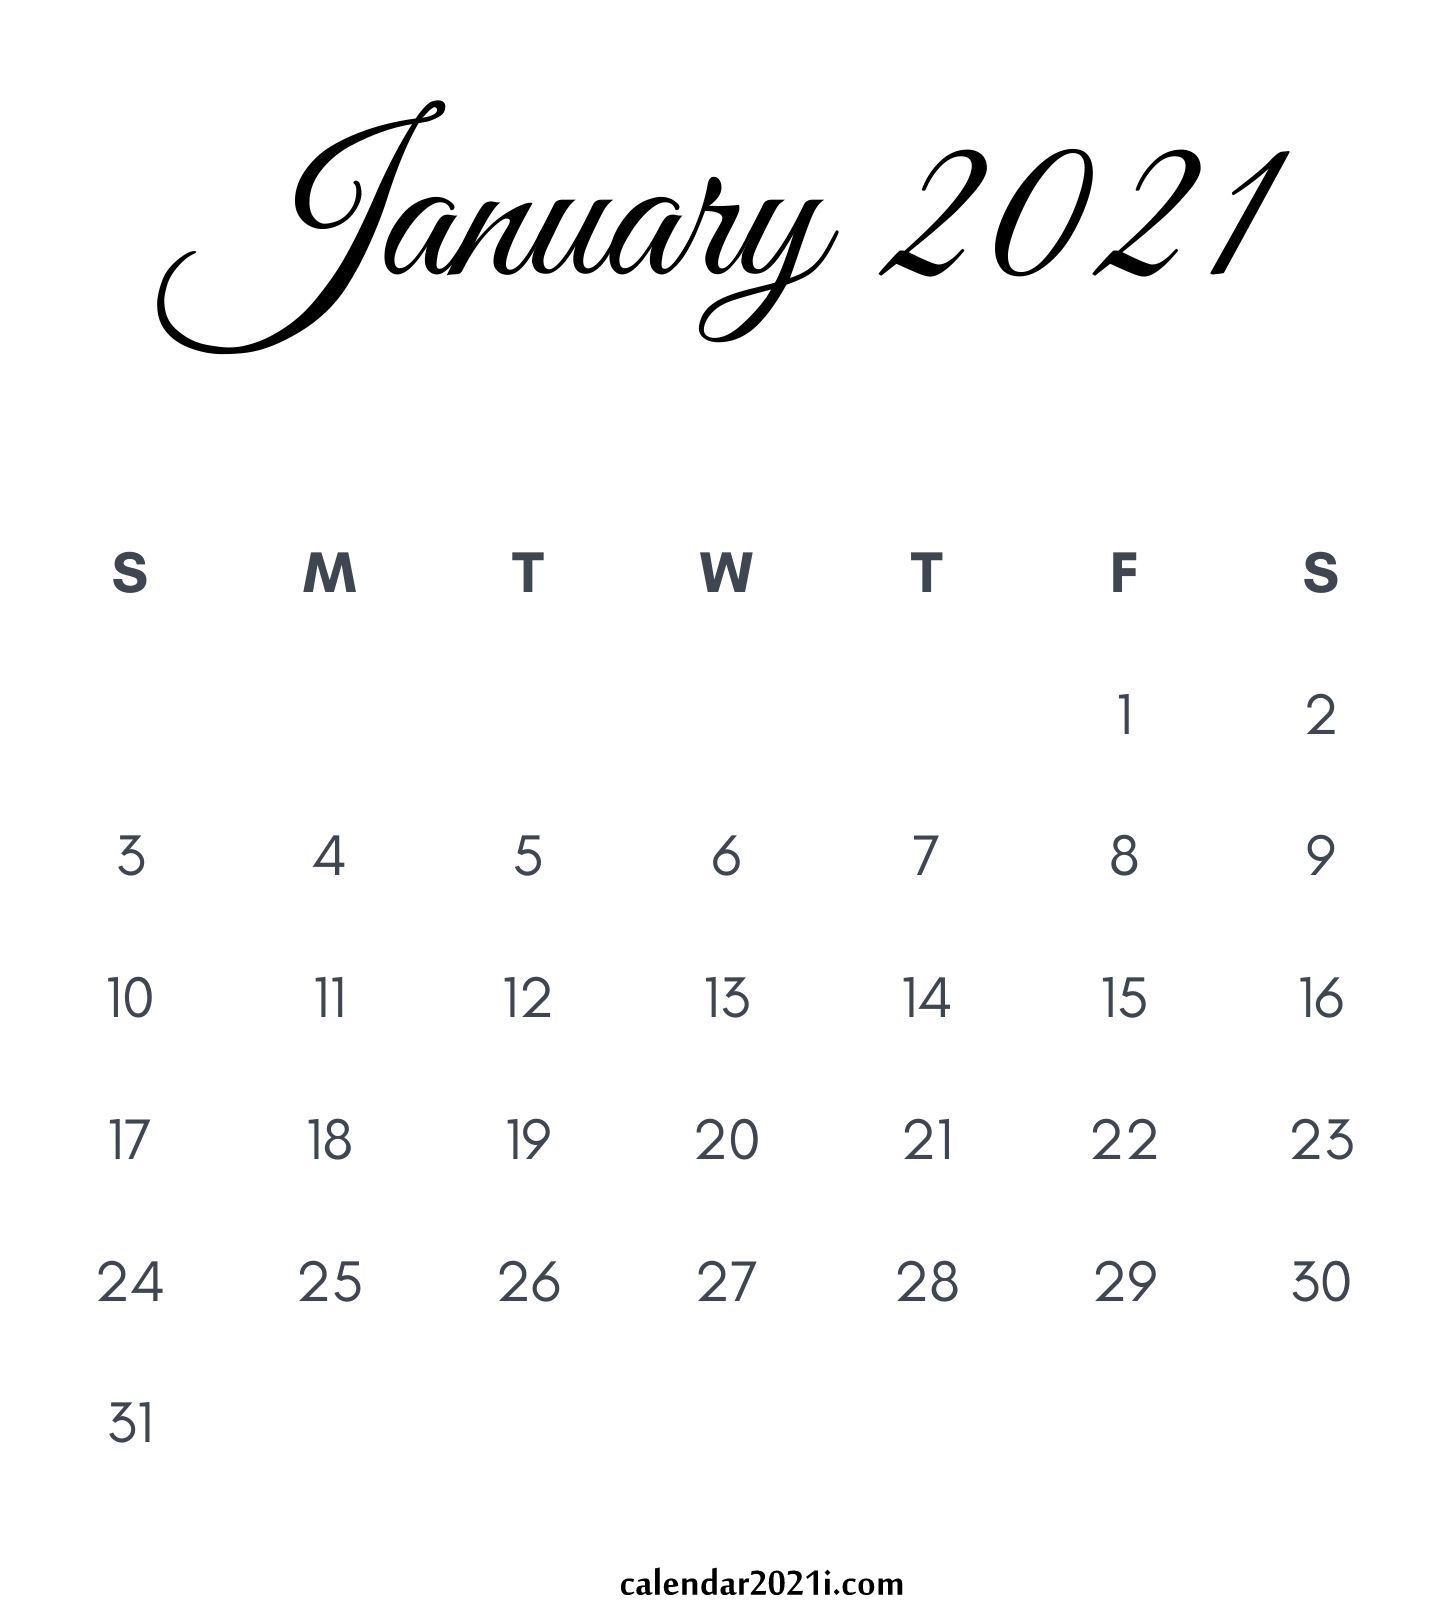 January 2021 Calendar: Printable, Wallpaper, Floral, Holidays & More